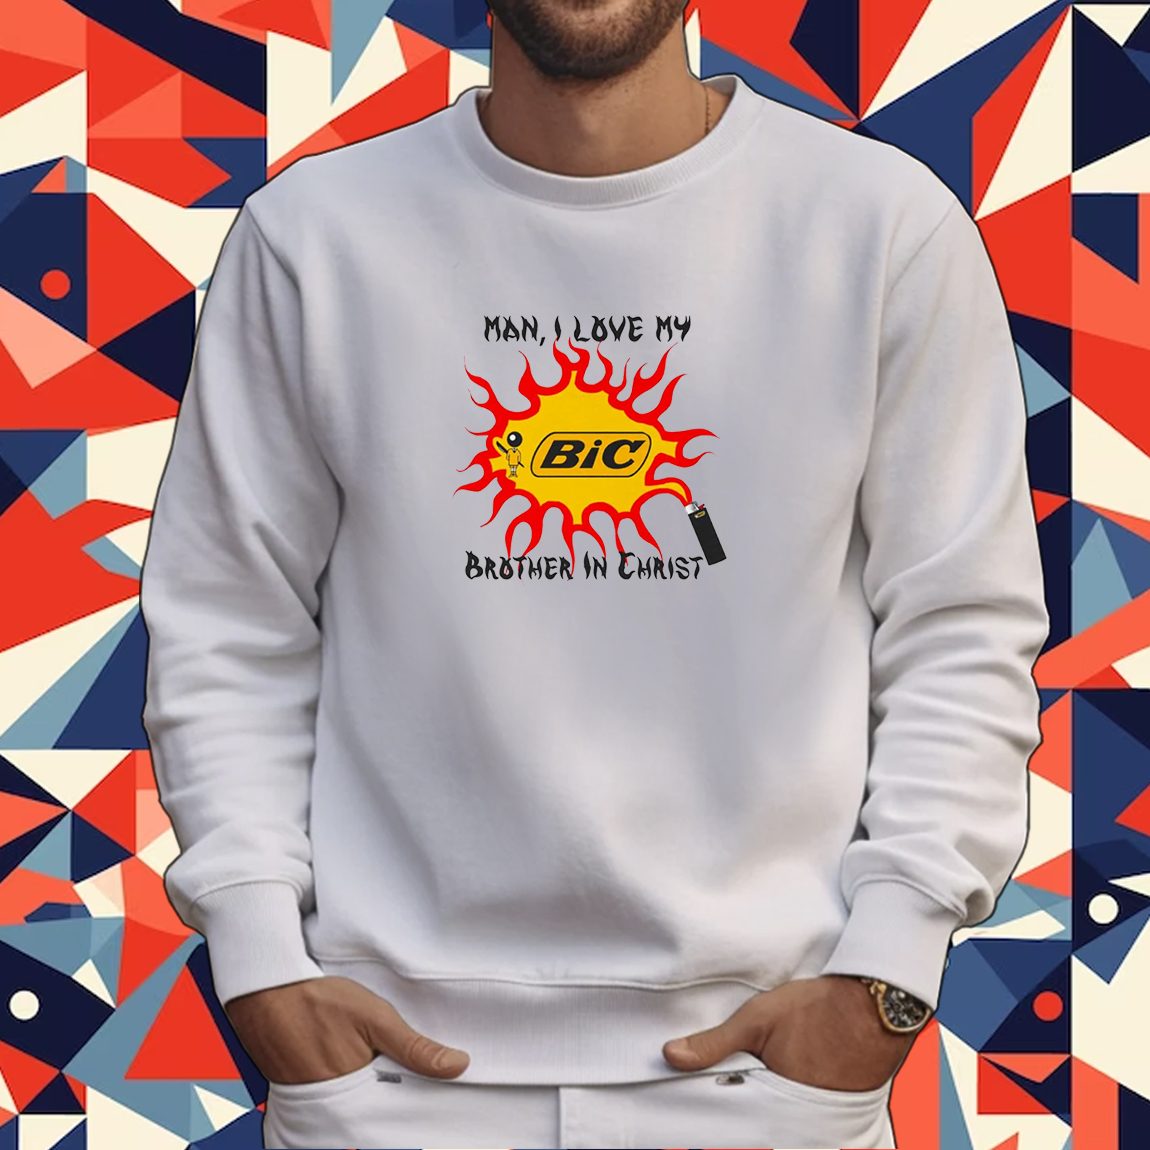 Snoopy Atlanta Braves Peace Love Braves Shirt, hoodie, sweater